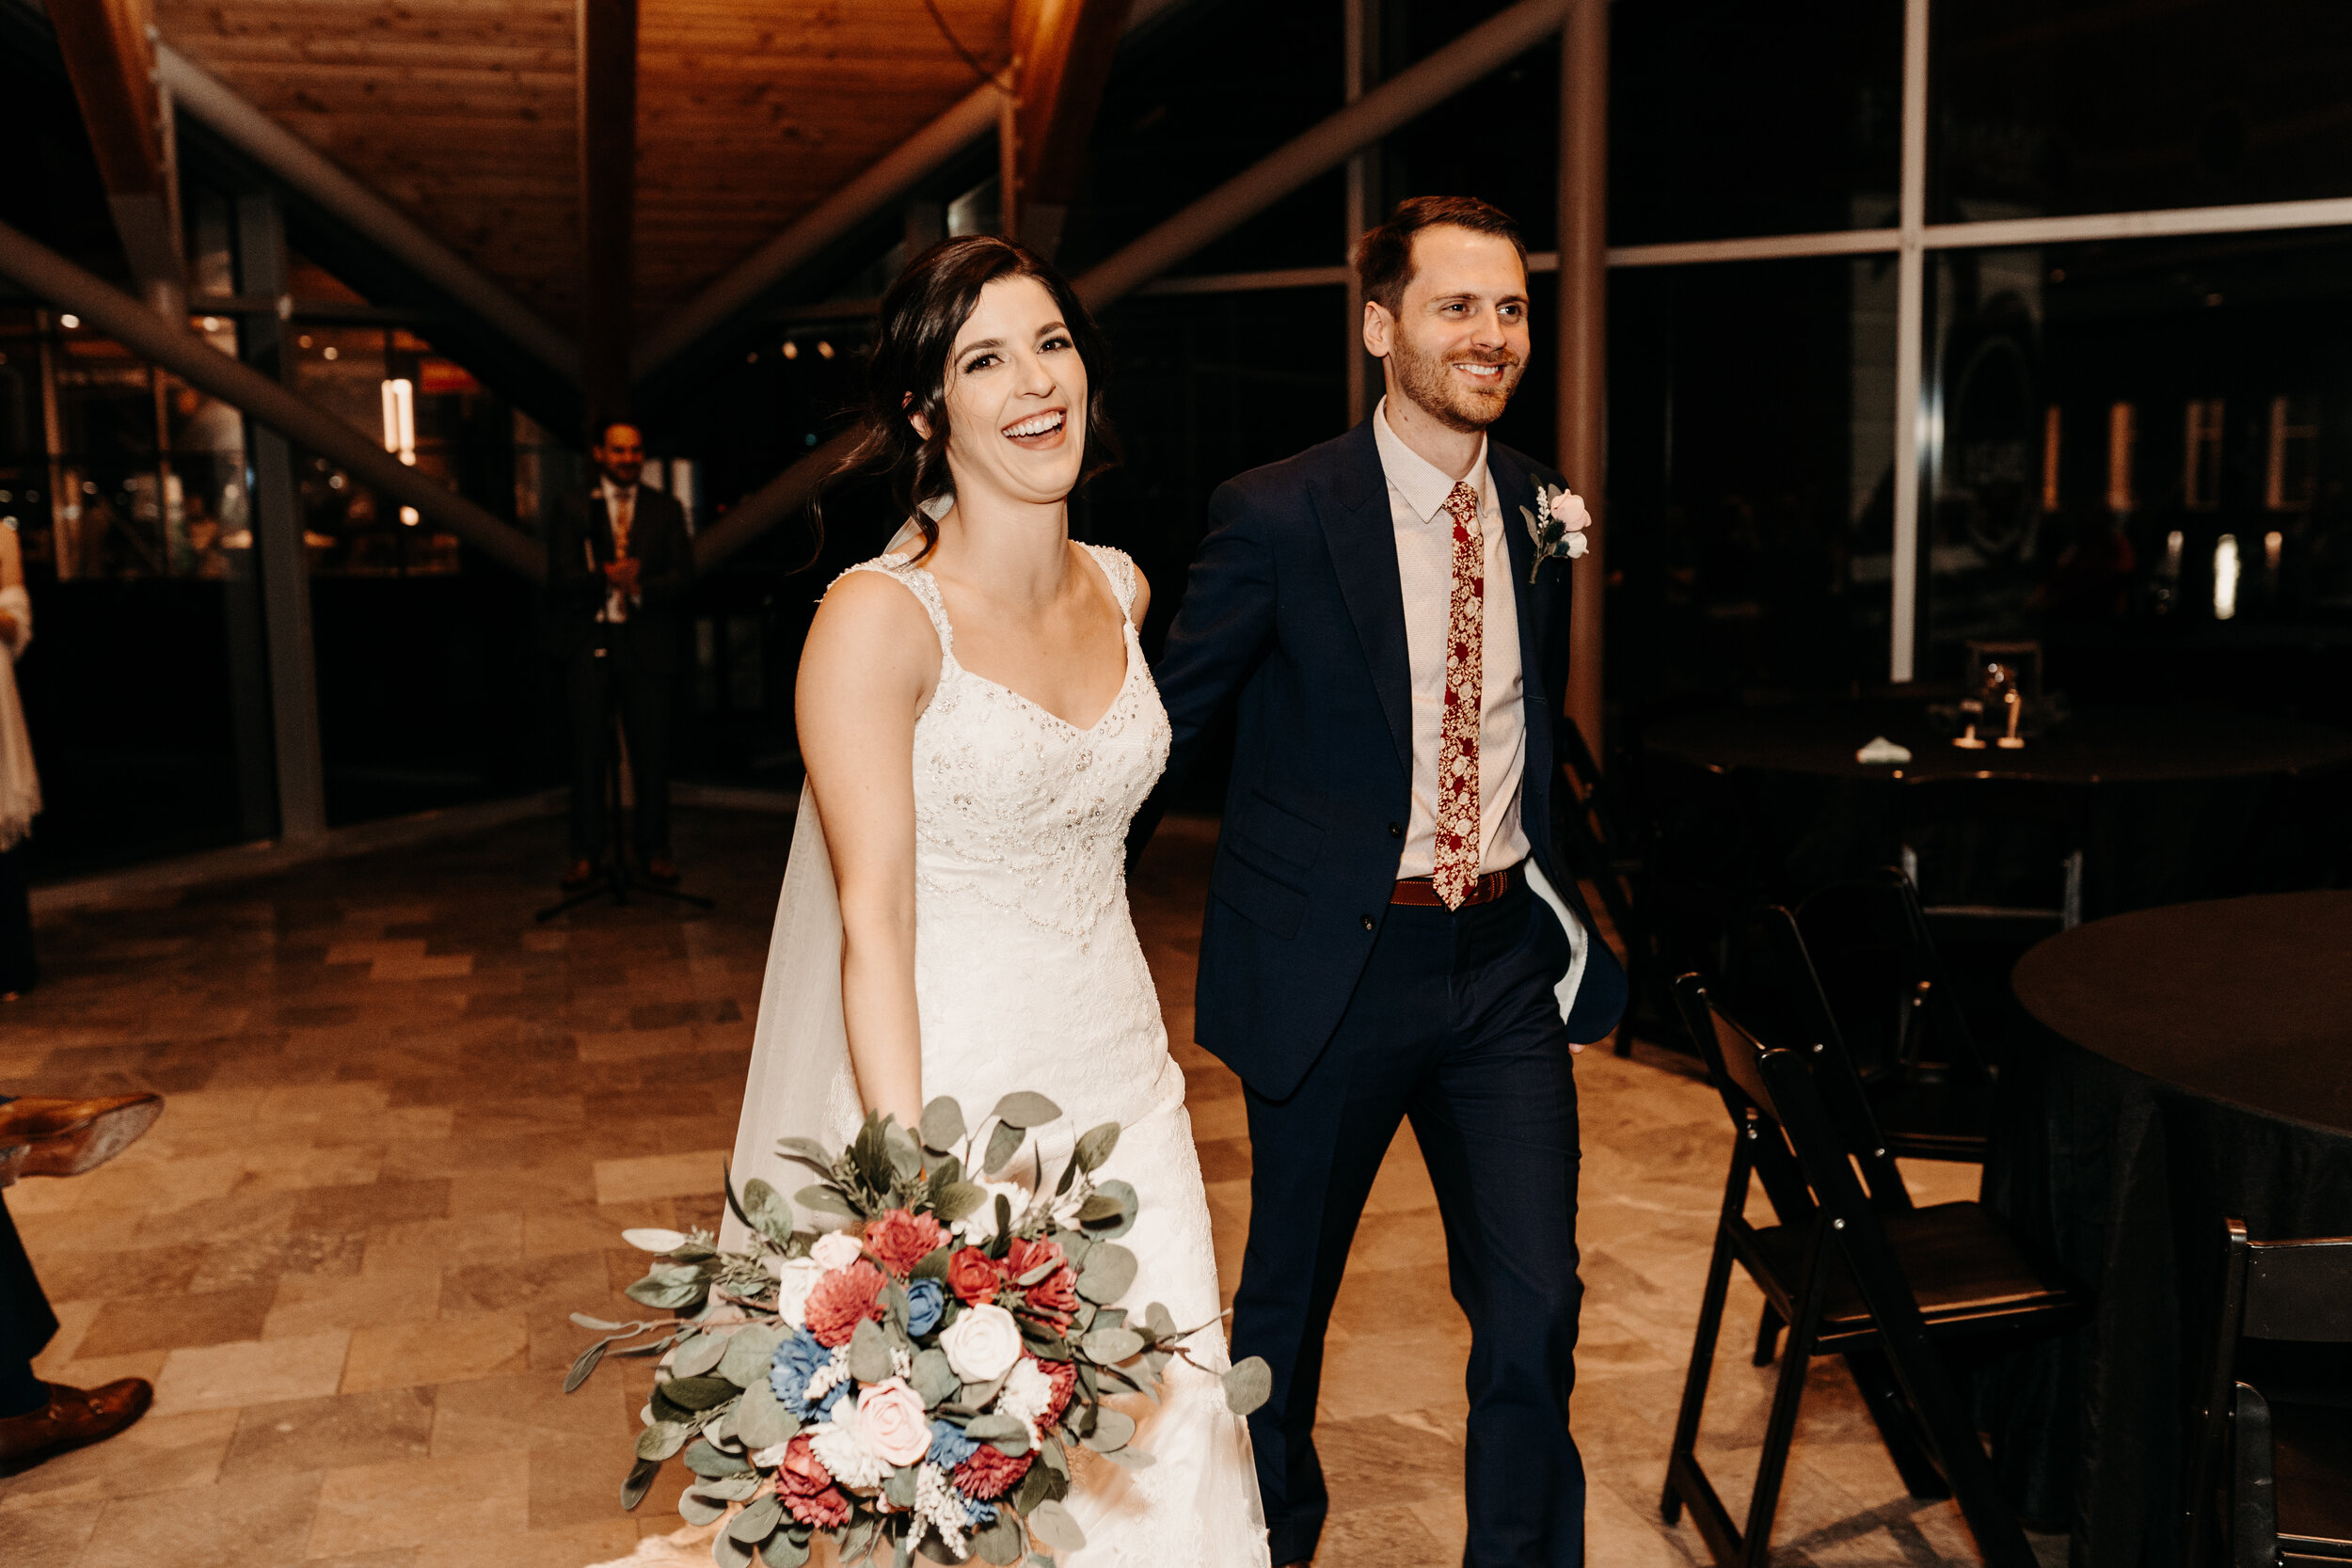 Brooke & John Pine - Modern Winter Wedding at The Exploration Place Wichita, Kansas130.jpg